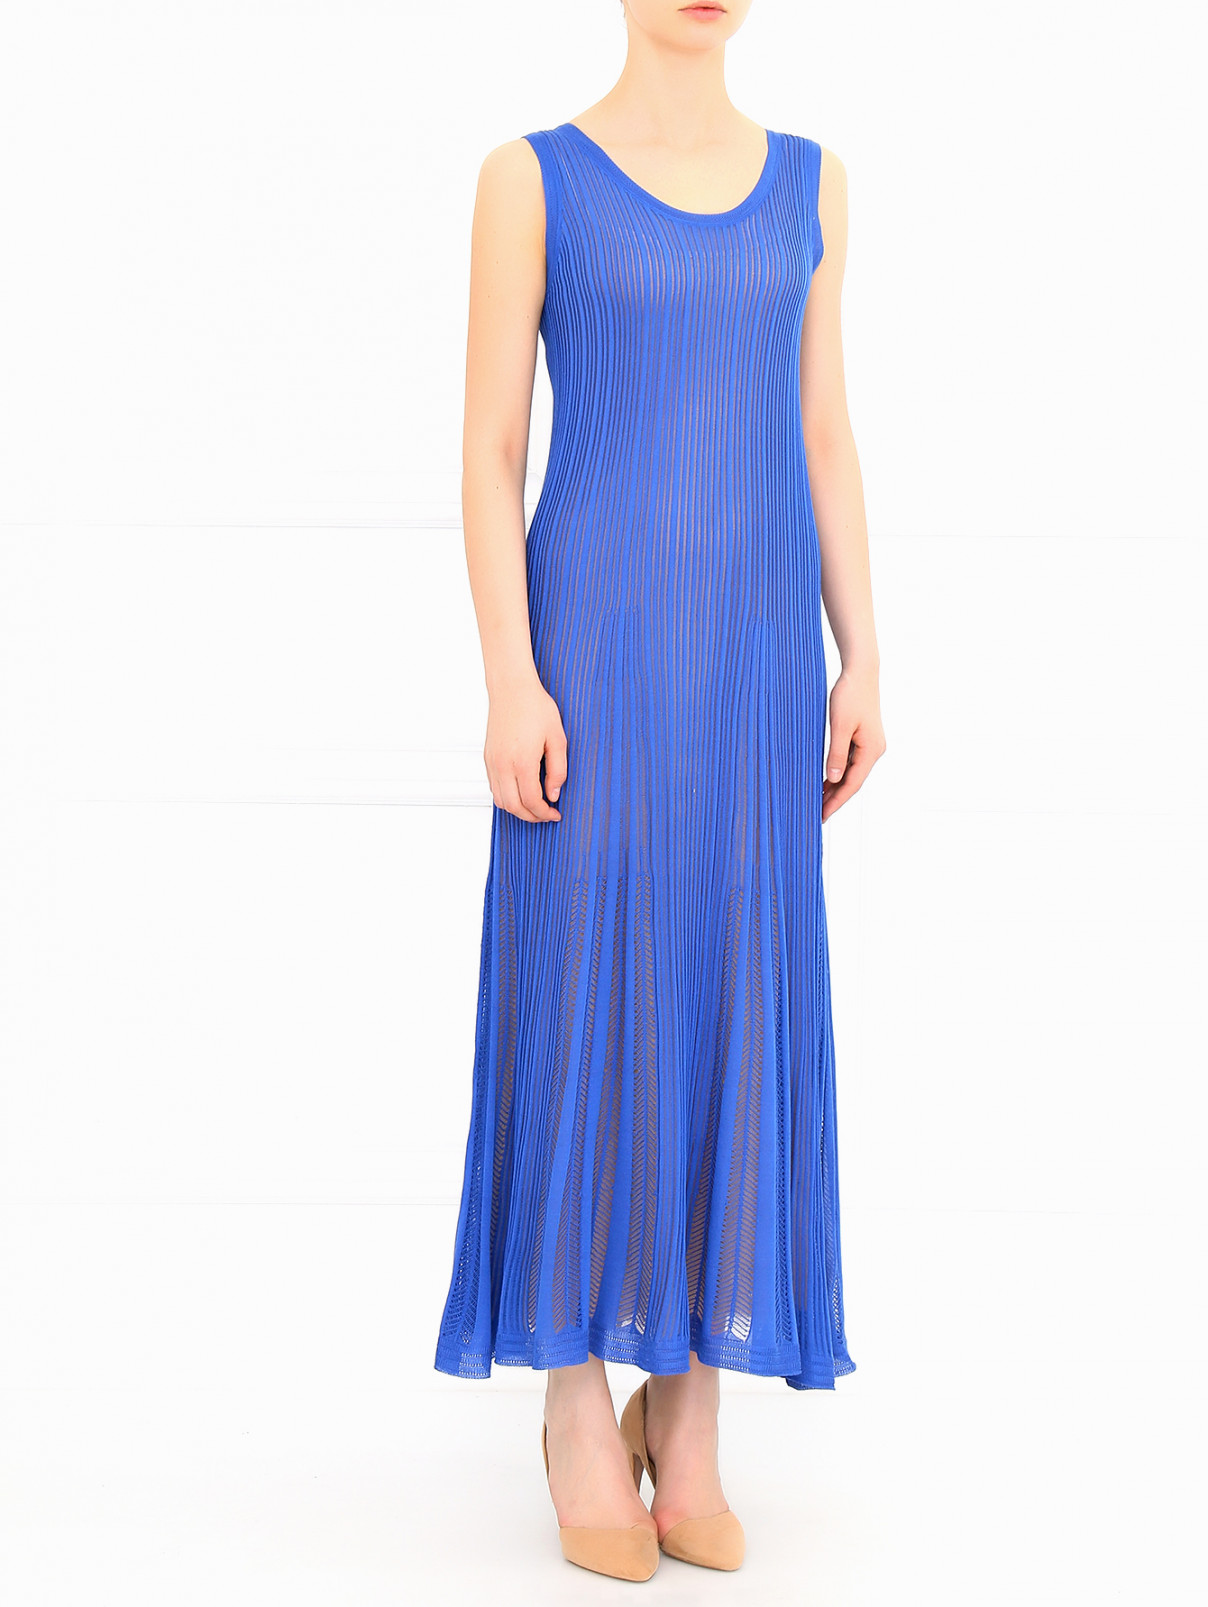 Платье-макси из шелка Alberta Ferretti  –  Модель Общий вид  – Цвет:  Синий